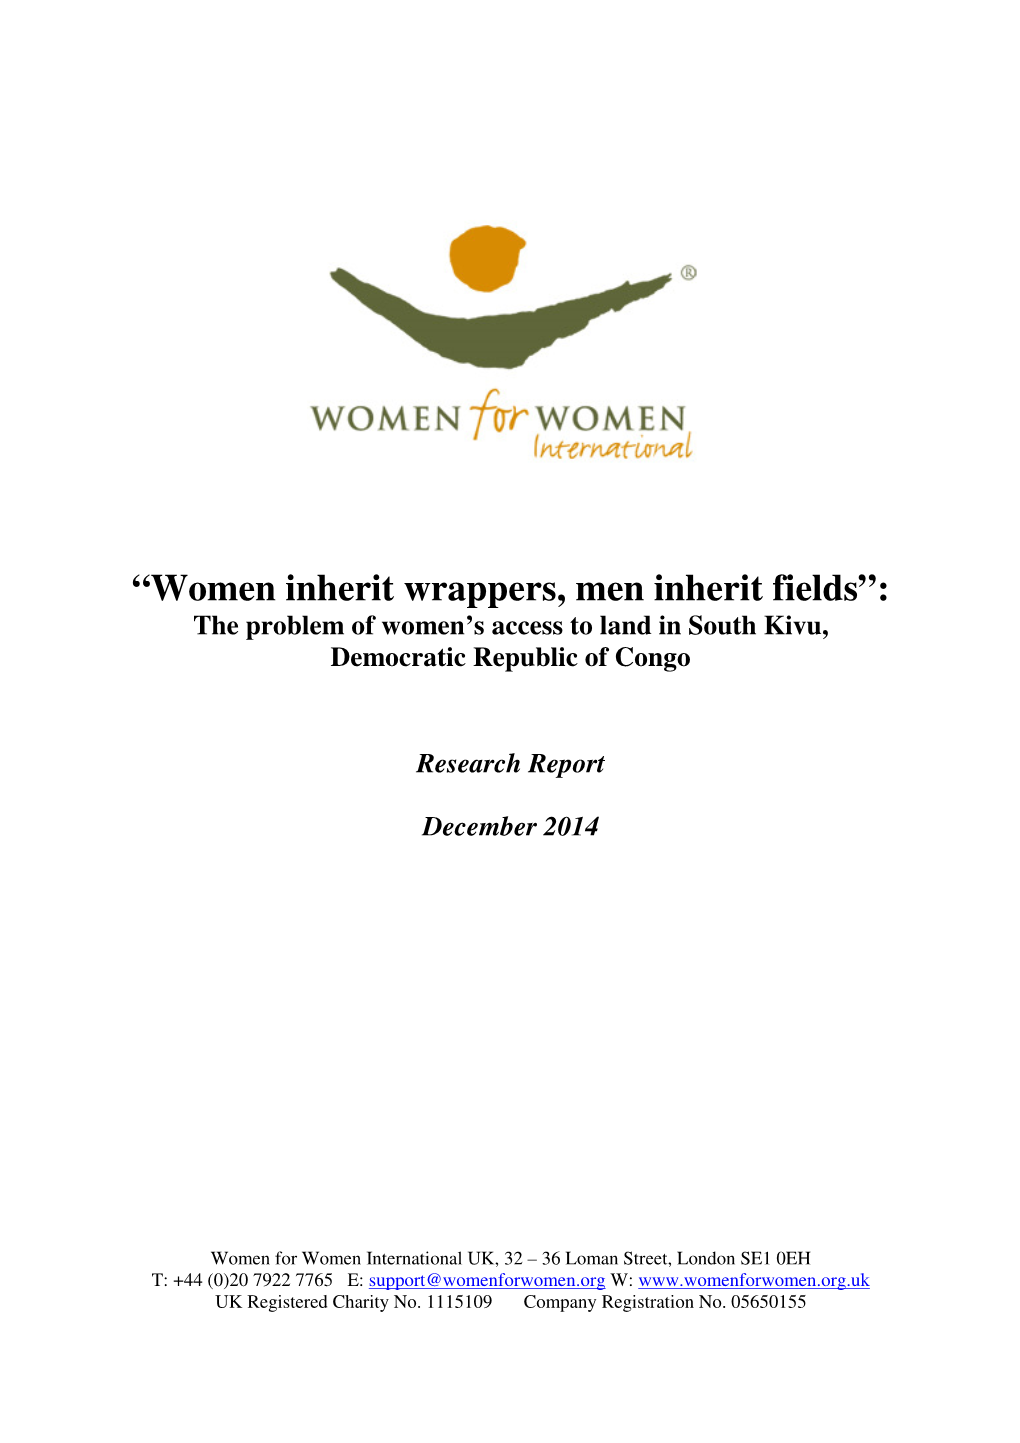 “Women Inherit Wrappers, Men Inherit Fields”: the Problem of Women’S Access to Land in South Kivu, Democratic Republic of Congo